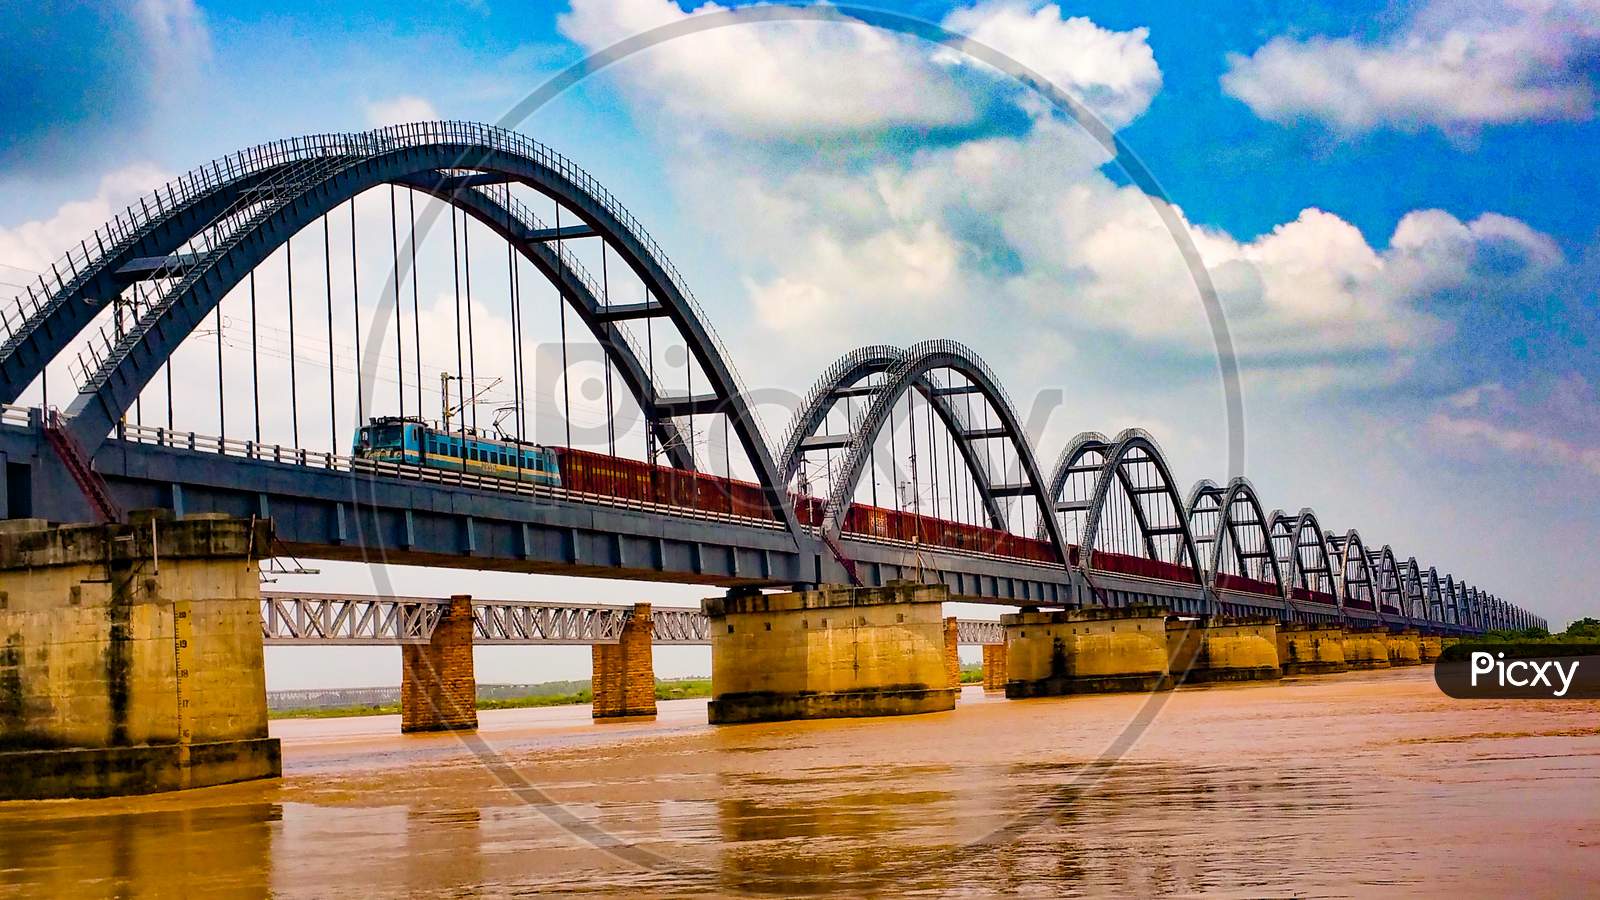 Train passing on arch railway bridge across the Godavari river.